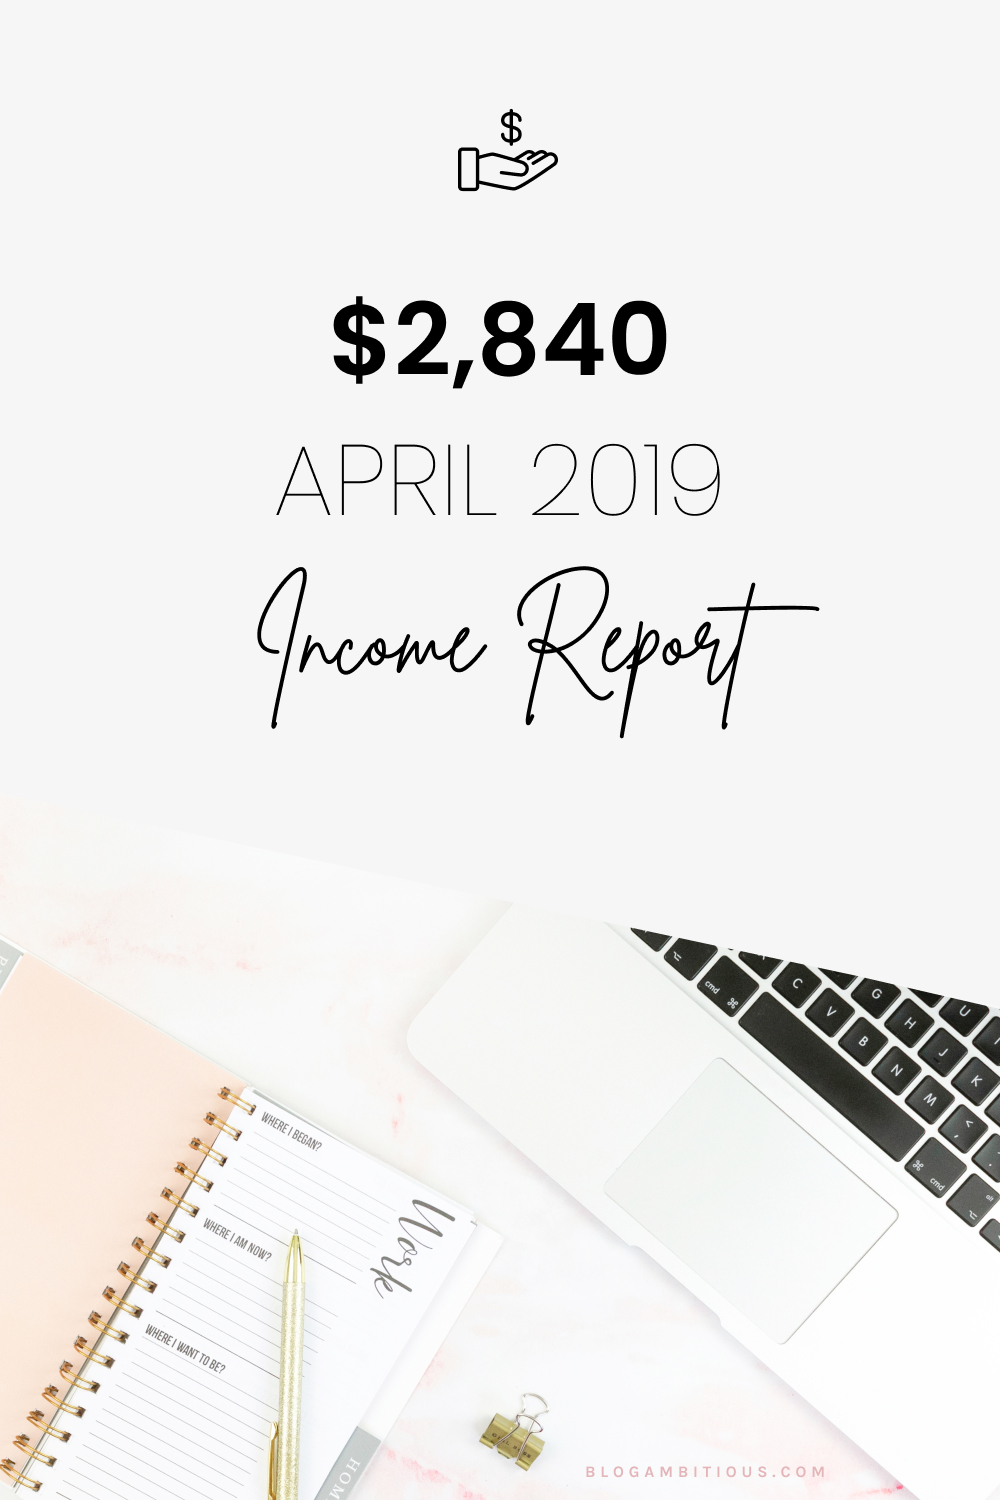 April 2019 Blog Income Report